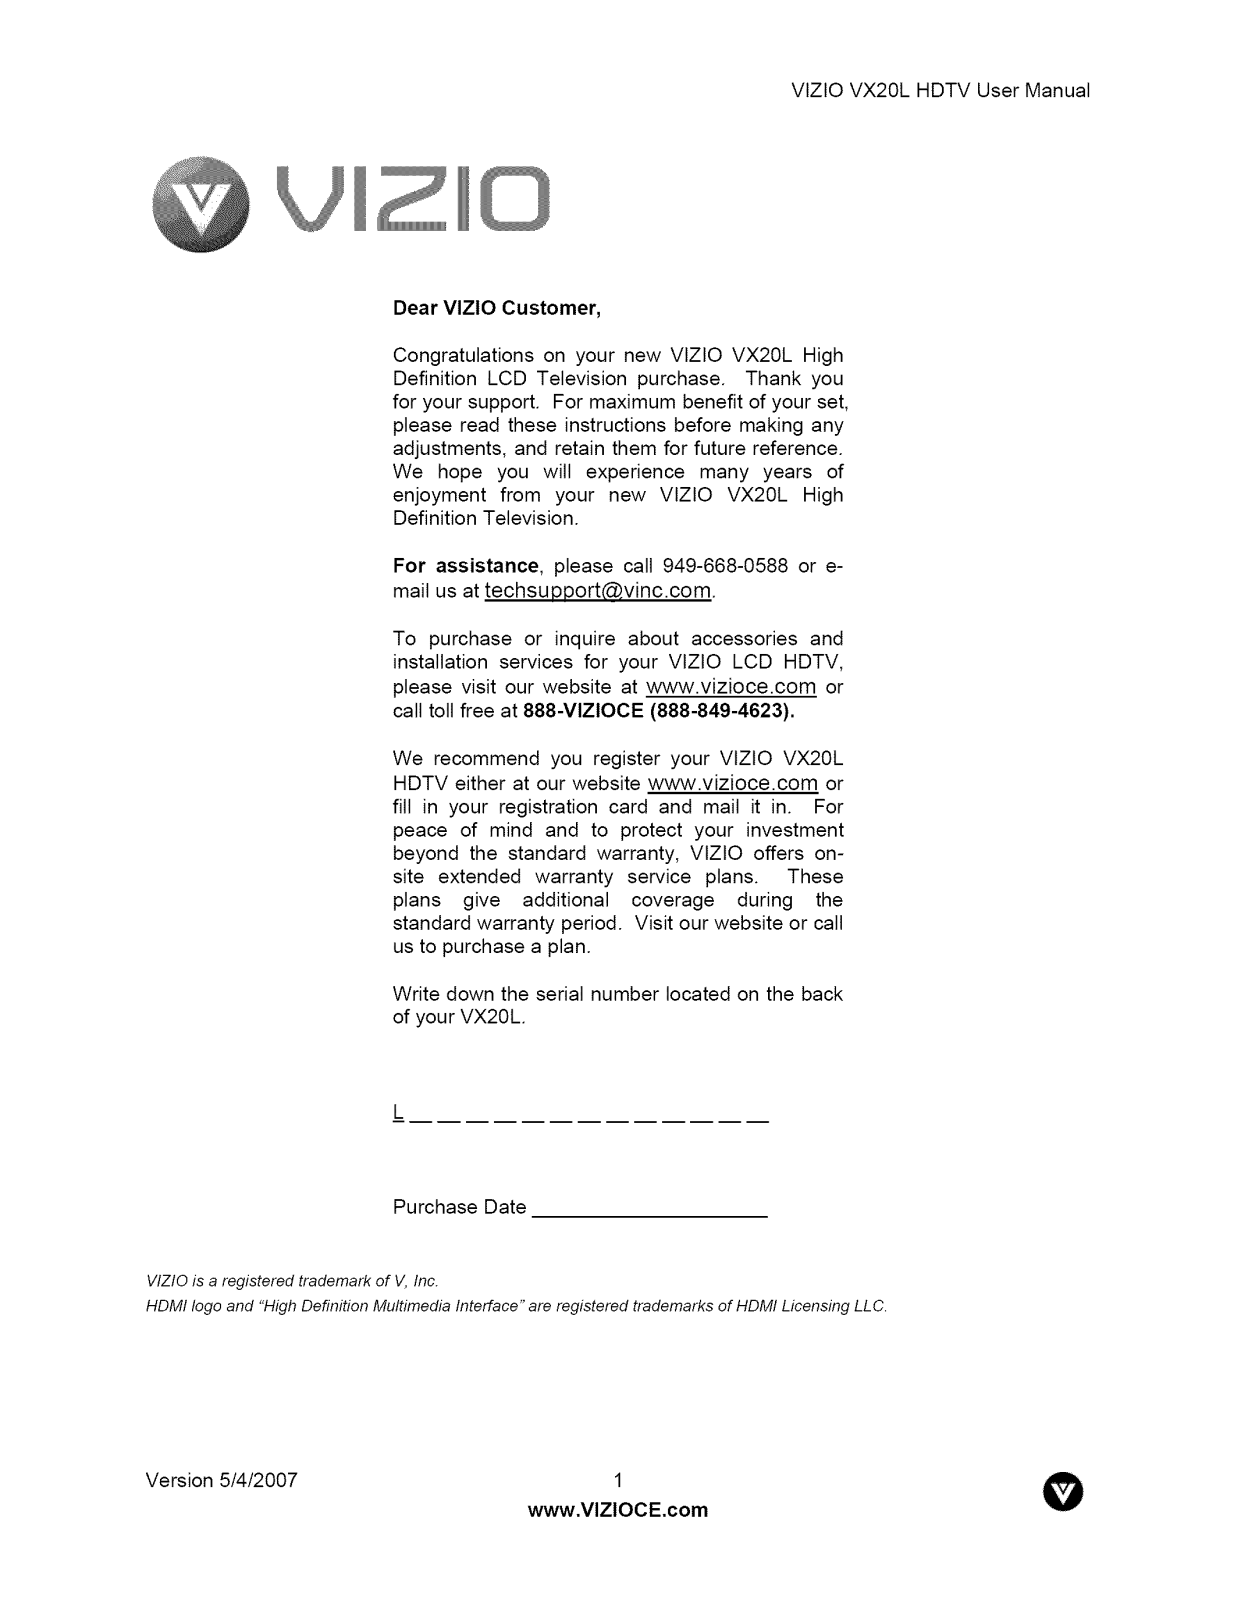 Vizio VX20LHDTV, VX20LHDTV20A Owner’s Manual